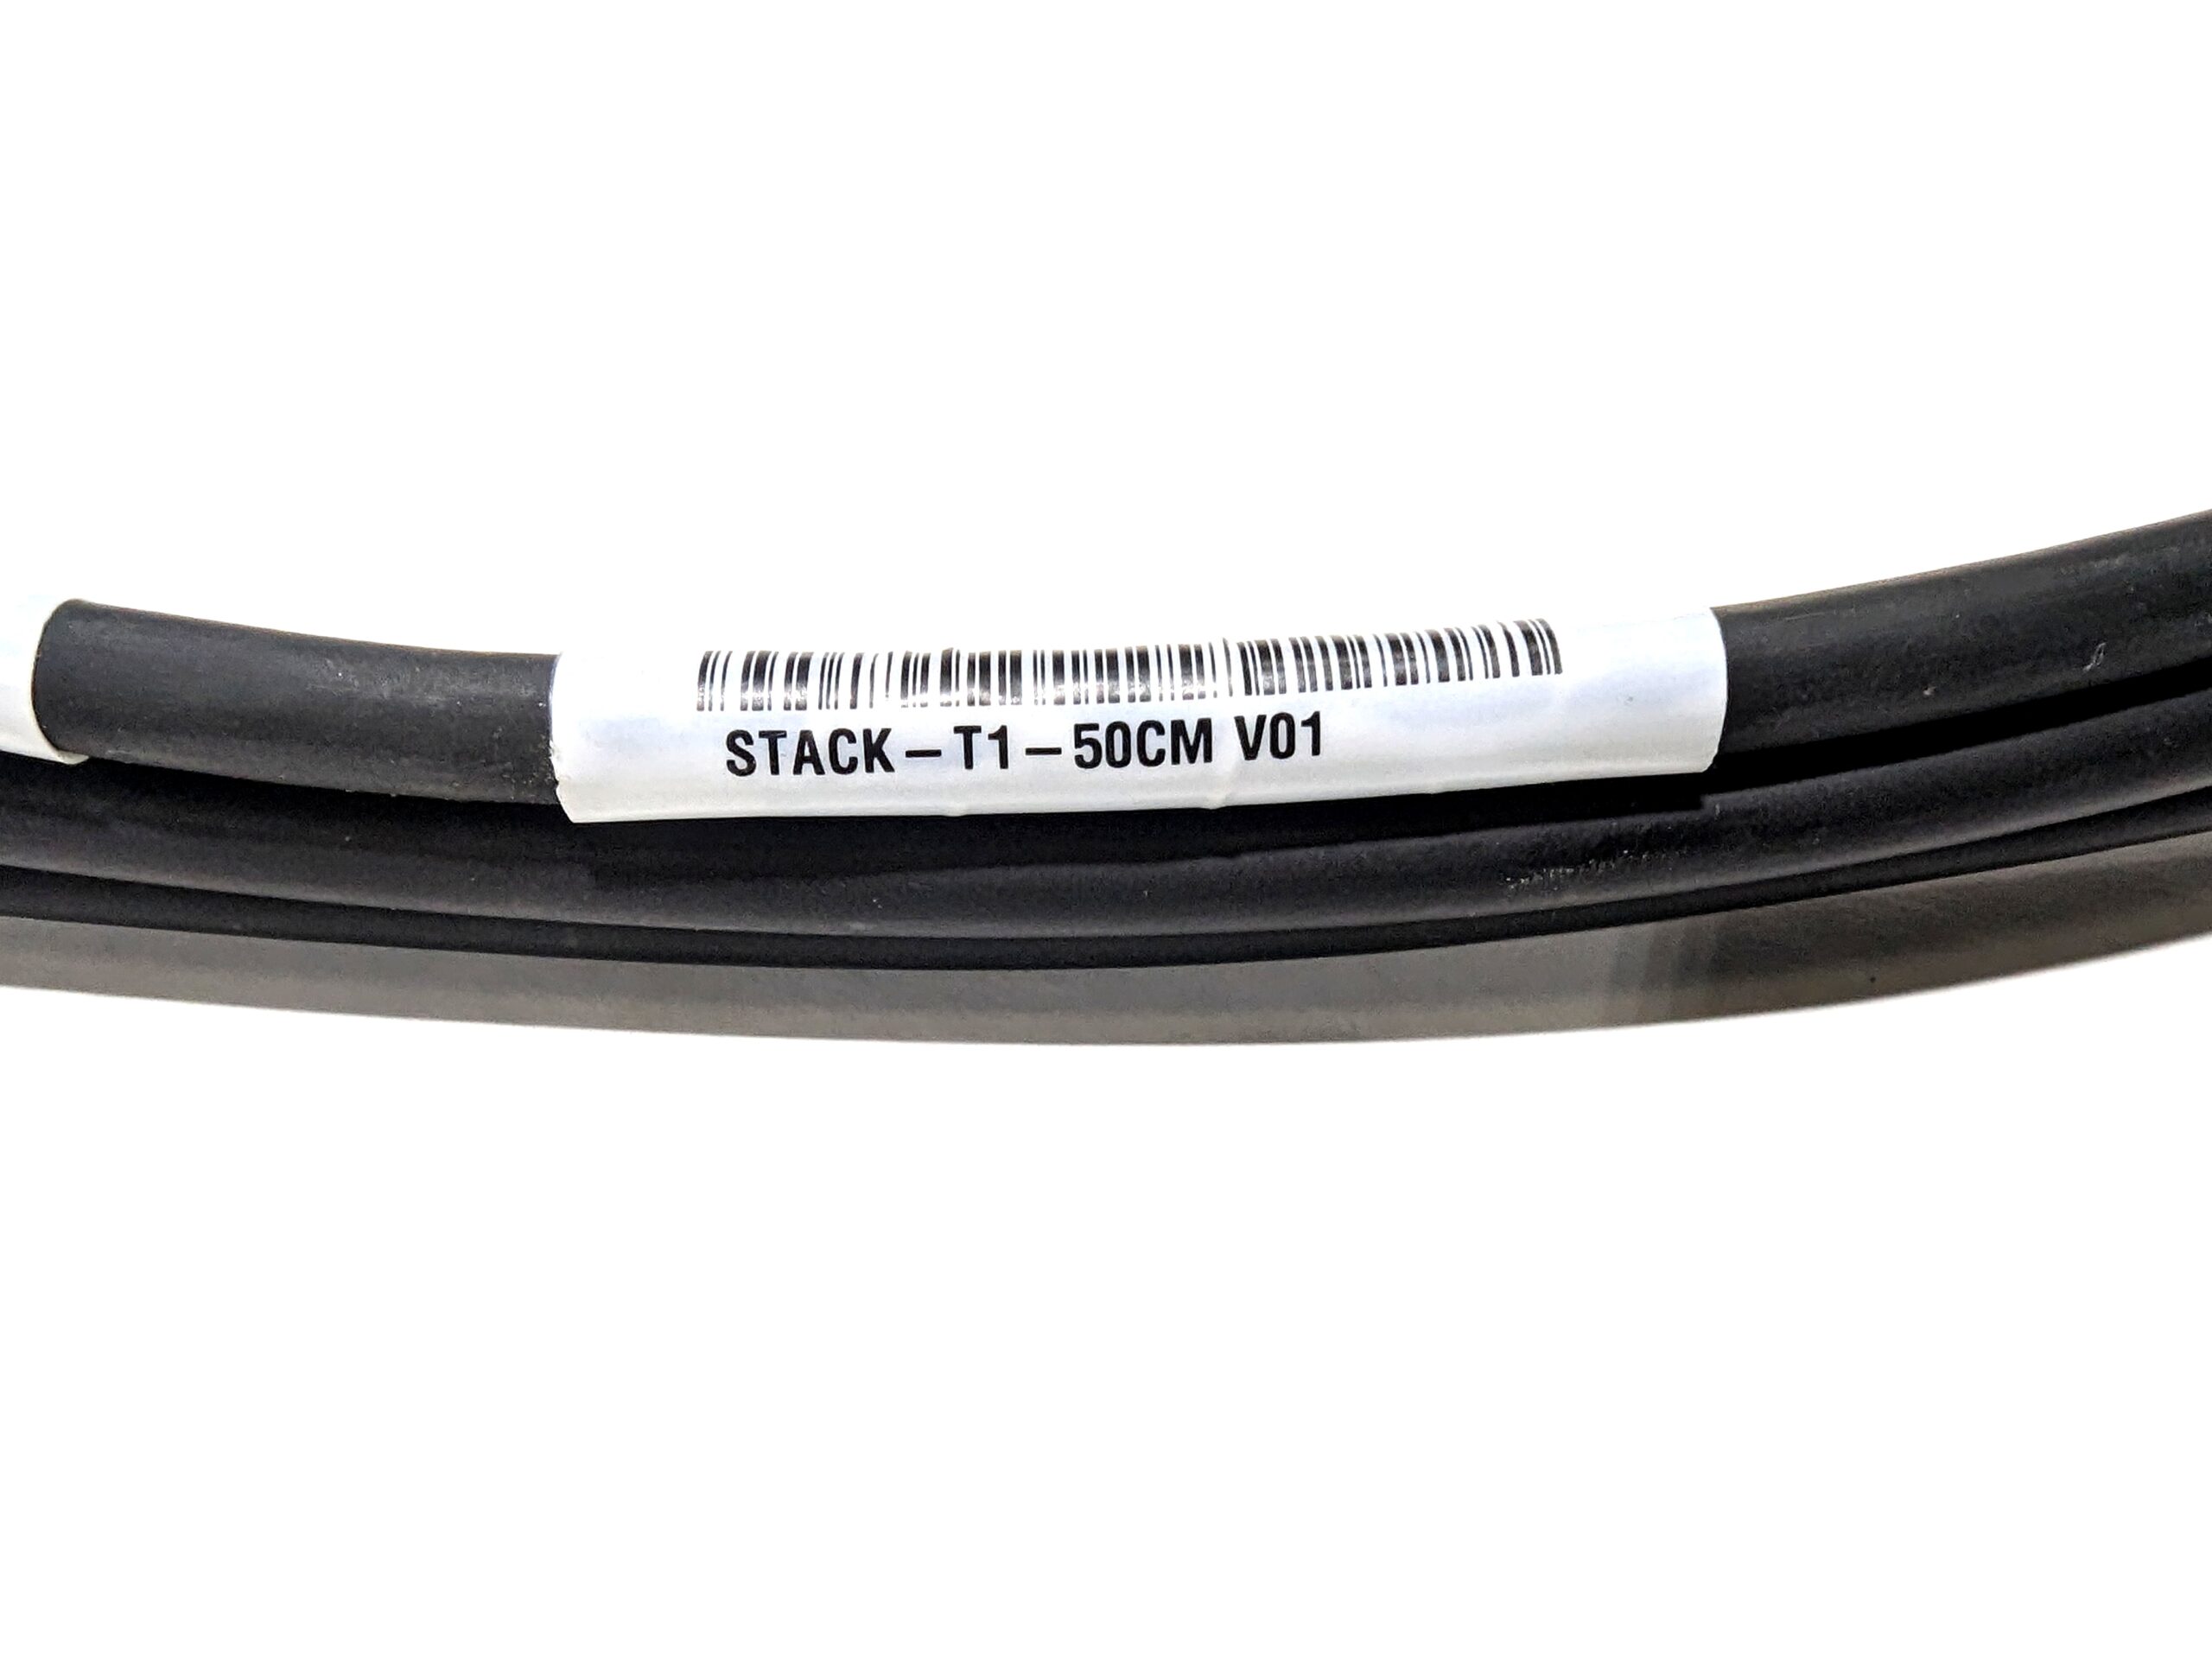 Cisco Stack-T1-50CM V01 Cable 800-40403-01